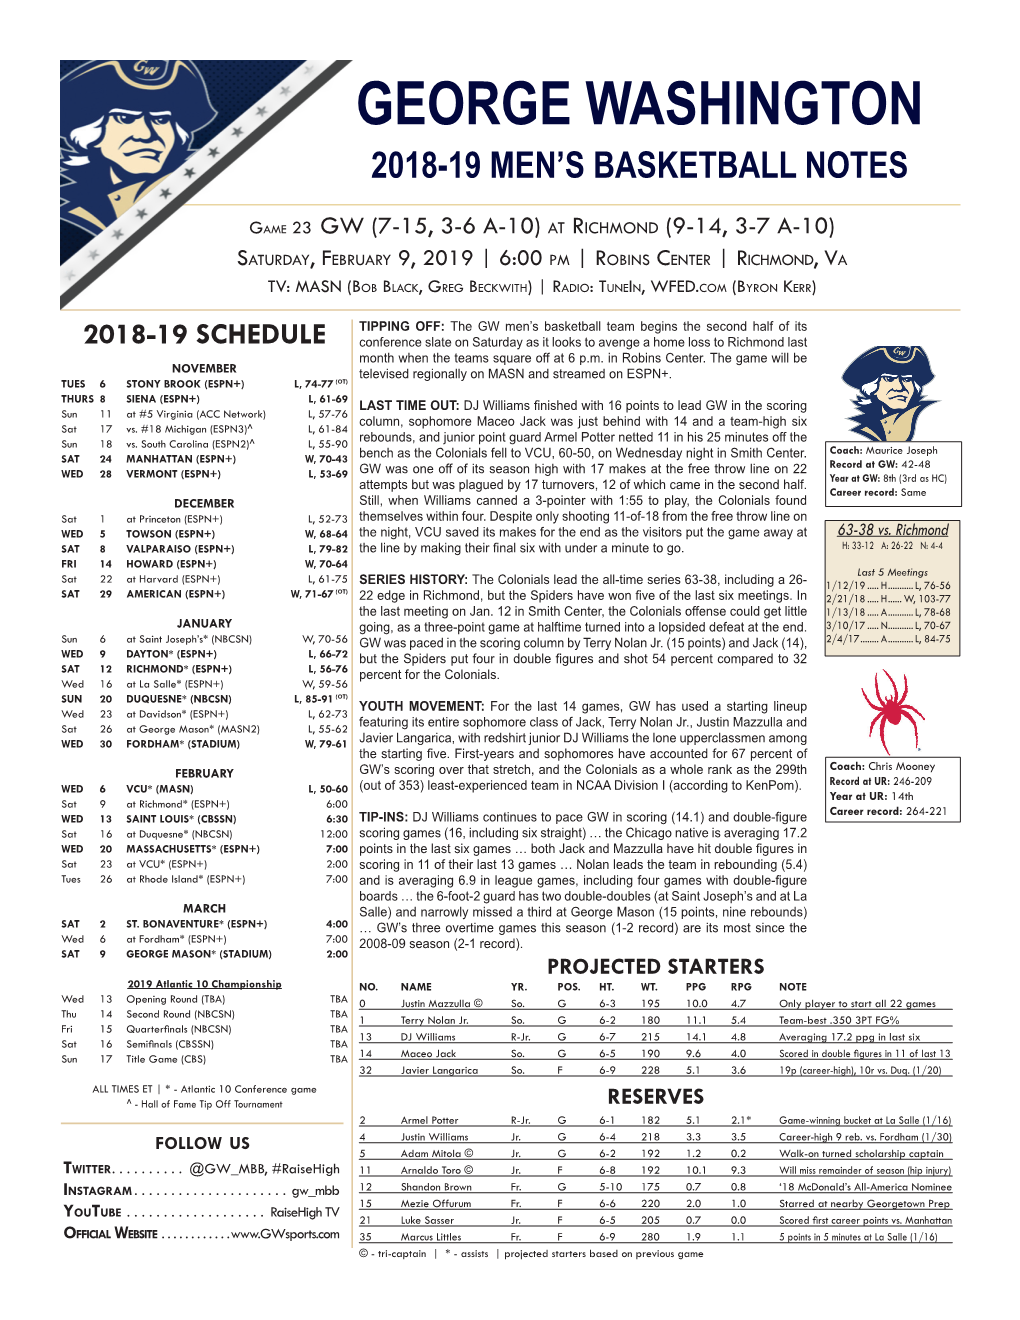 George Washington 2018-19 Men's Basketball Notes